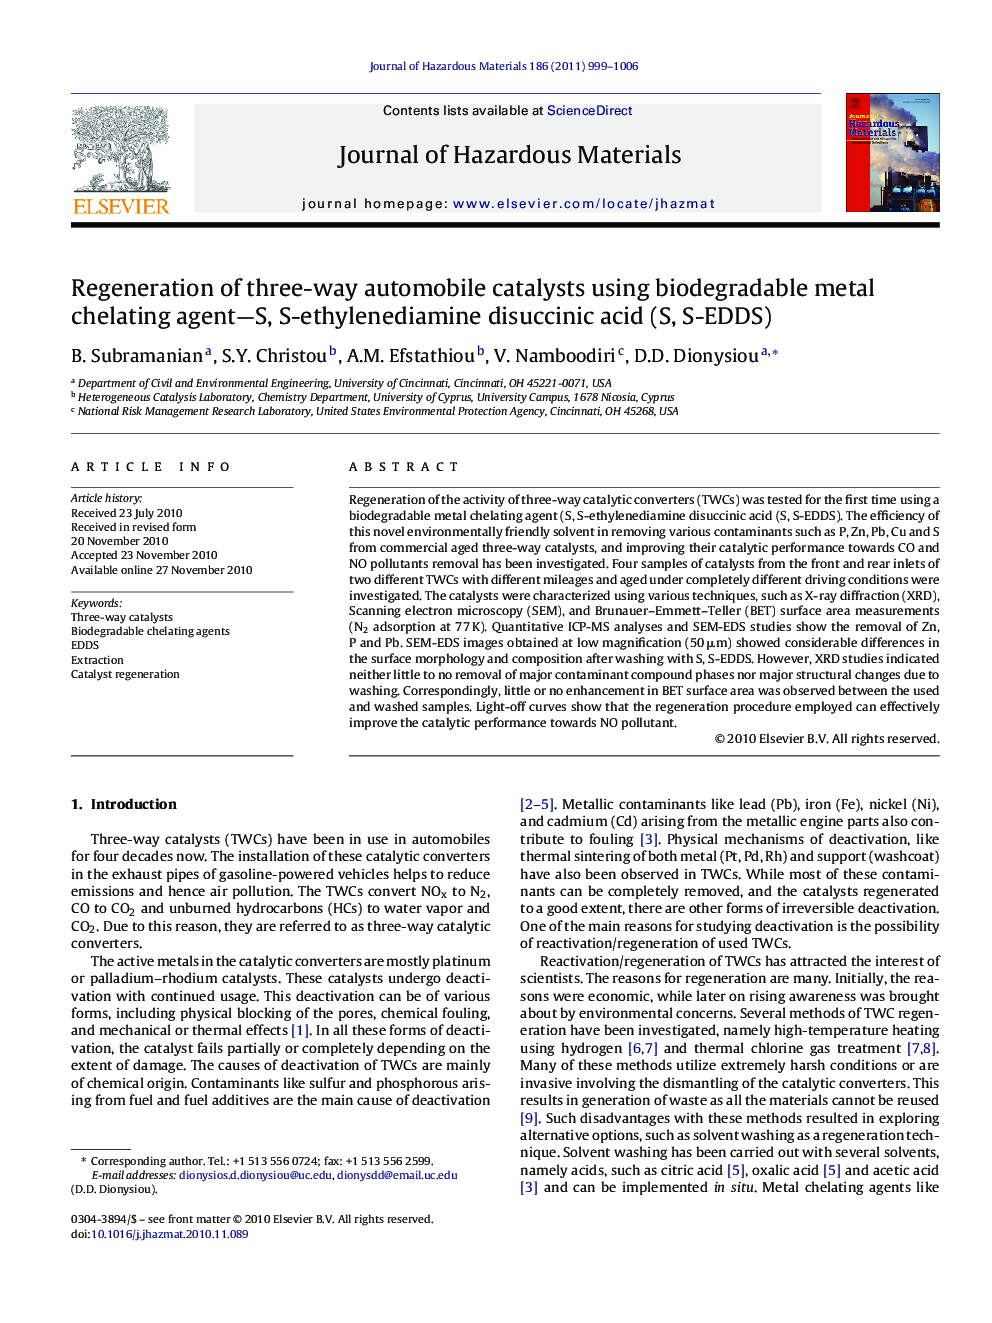 Regeneration of three-way automobile catalysts using biodegradable metal chelating agent-S, S-ethylenediamine disuccinic acid (S, S-EDDS)